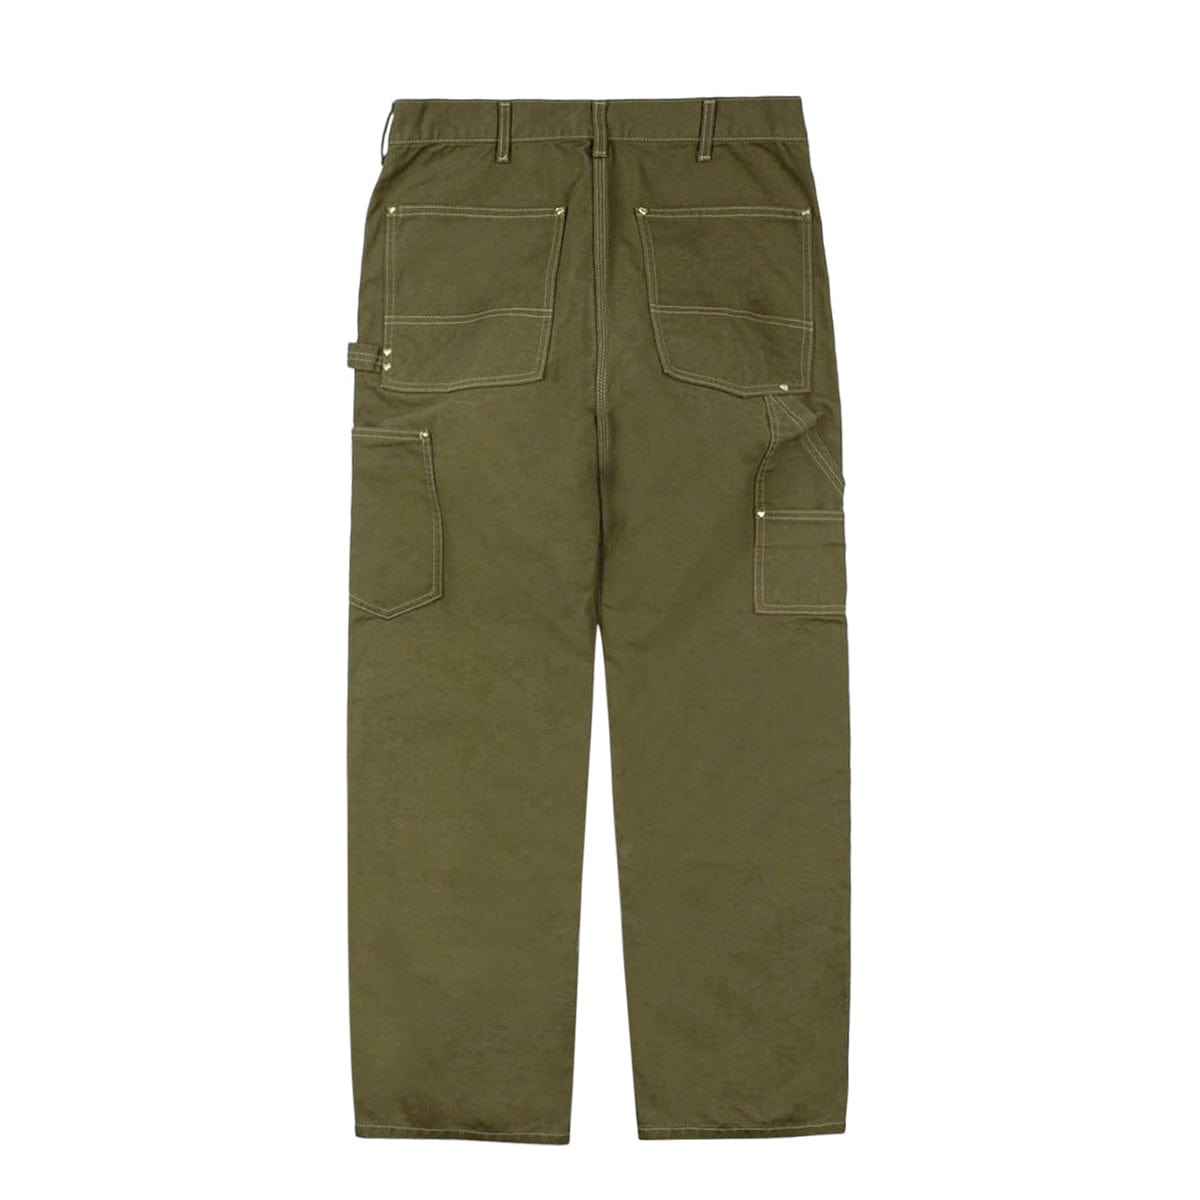 Tingley P12008 OD Men's Flame-Resistant Olive Green Rain Pants